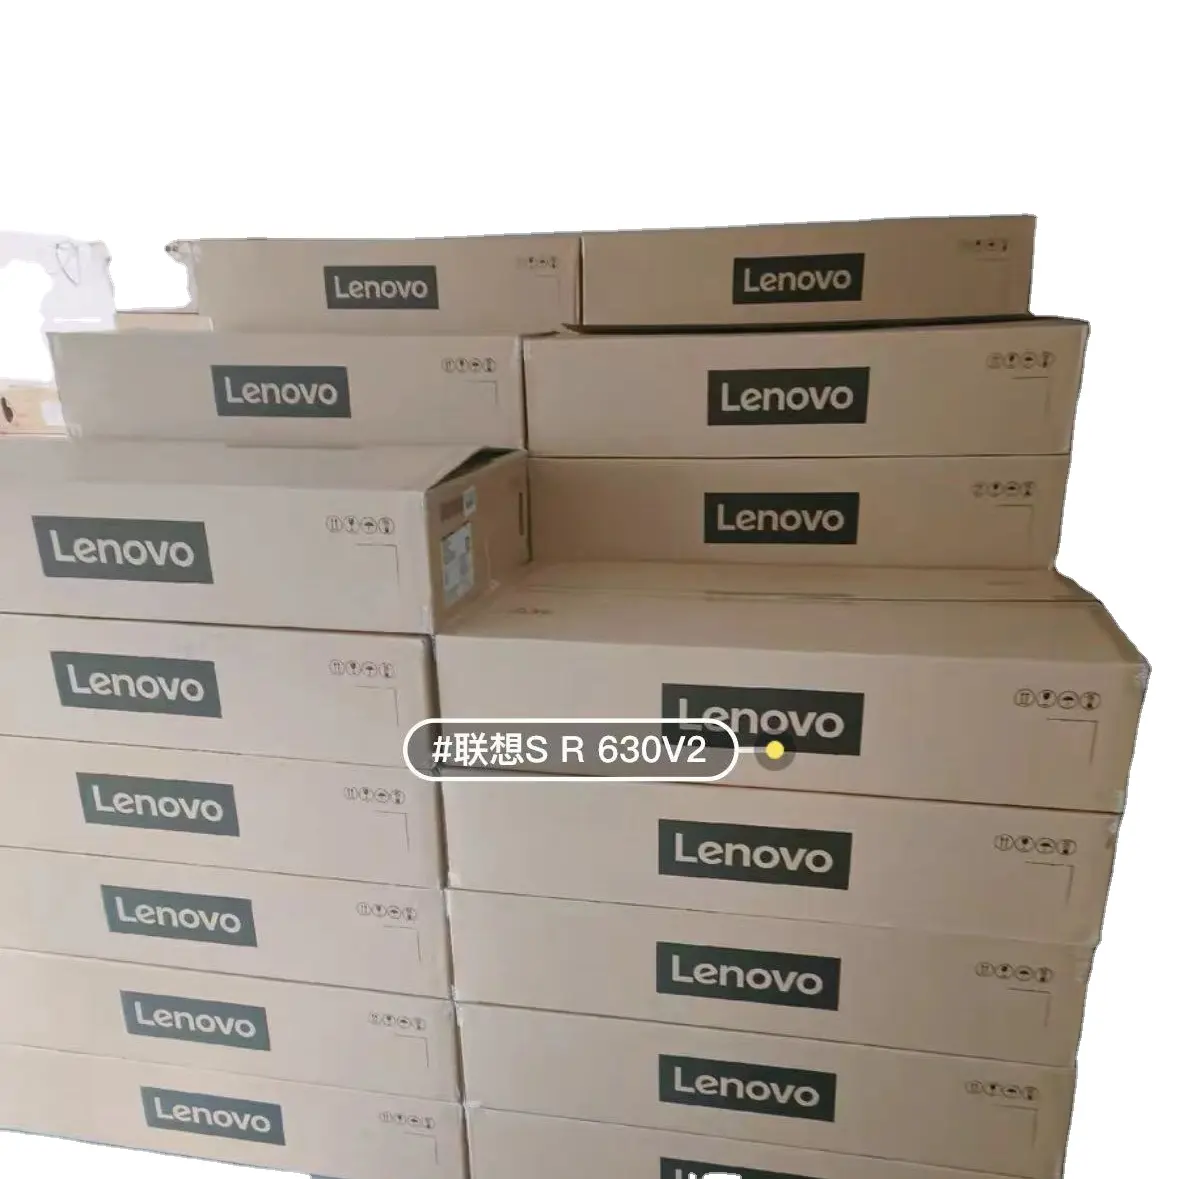 Lenovo Rack Server ThinkSystem SR630 1U peladen terpasang di rak